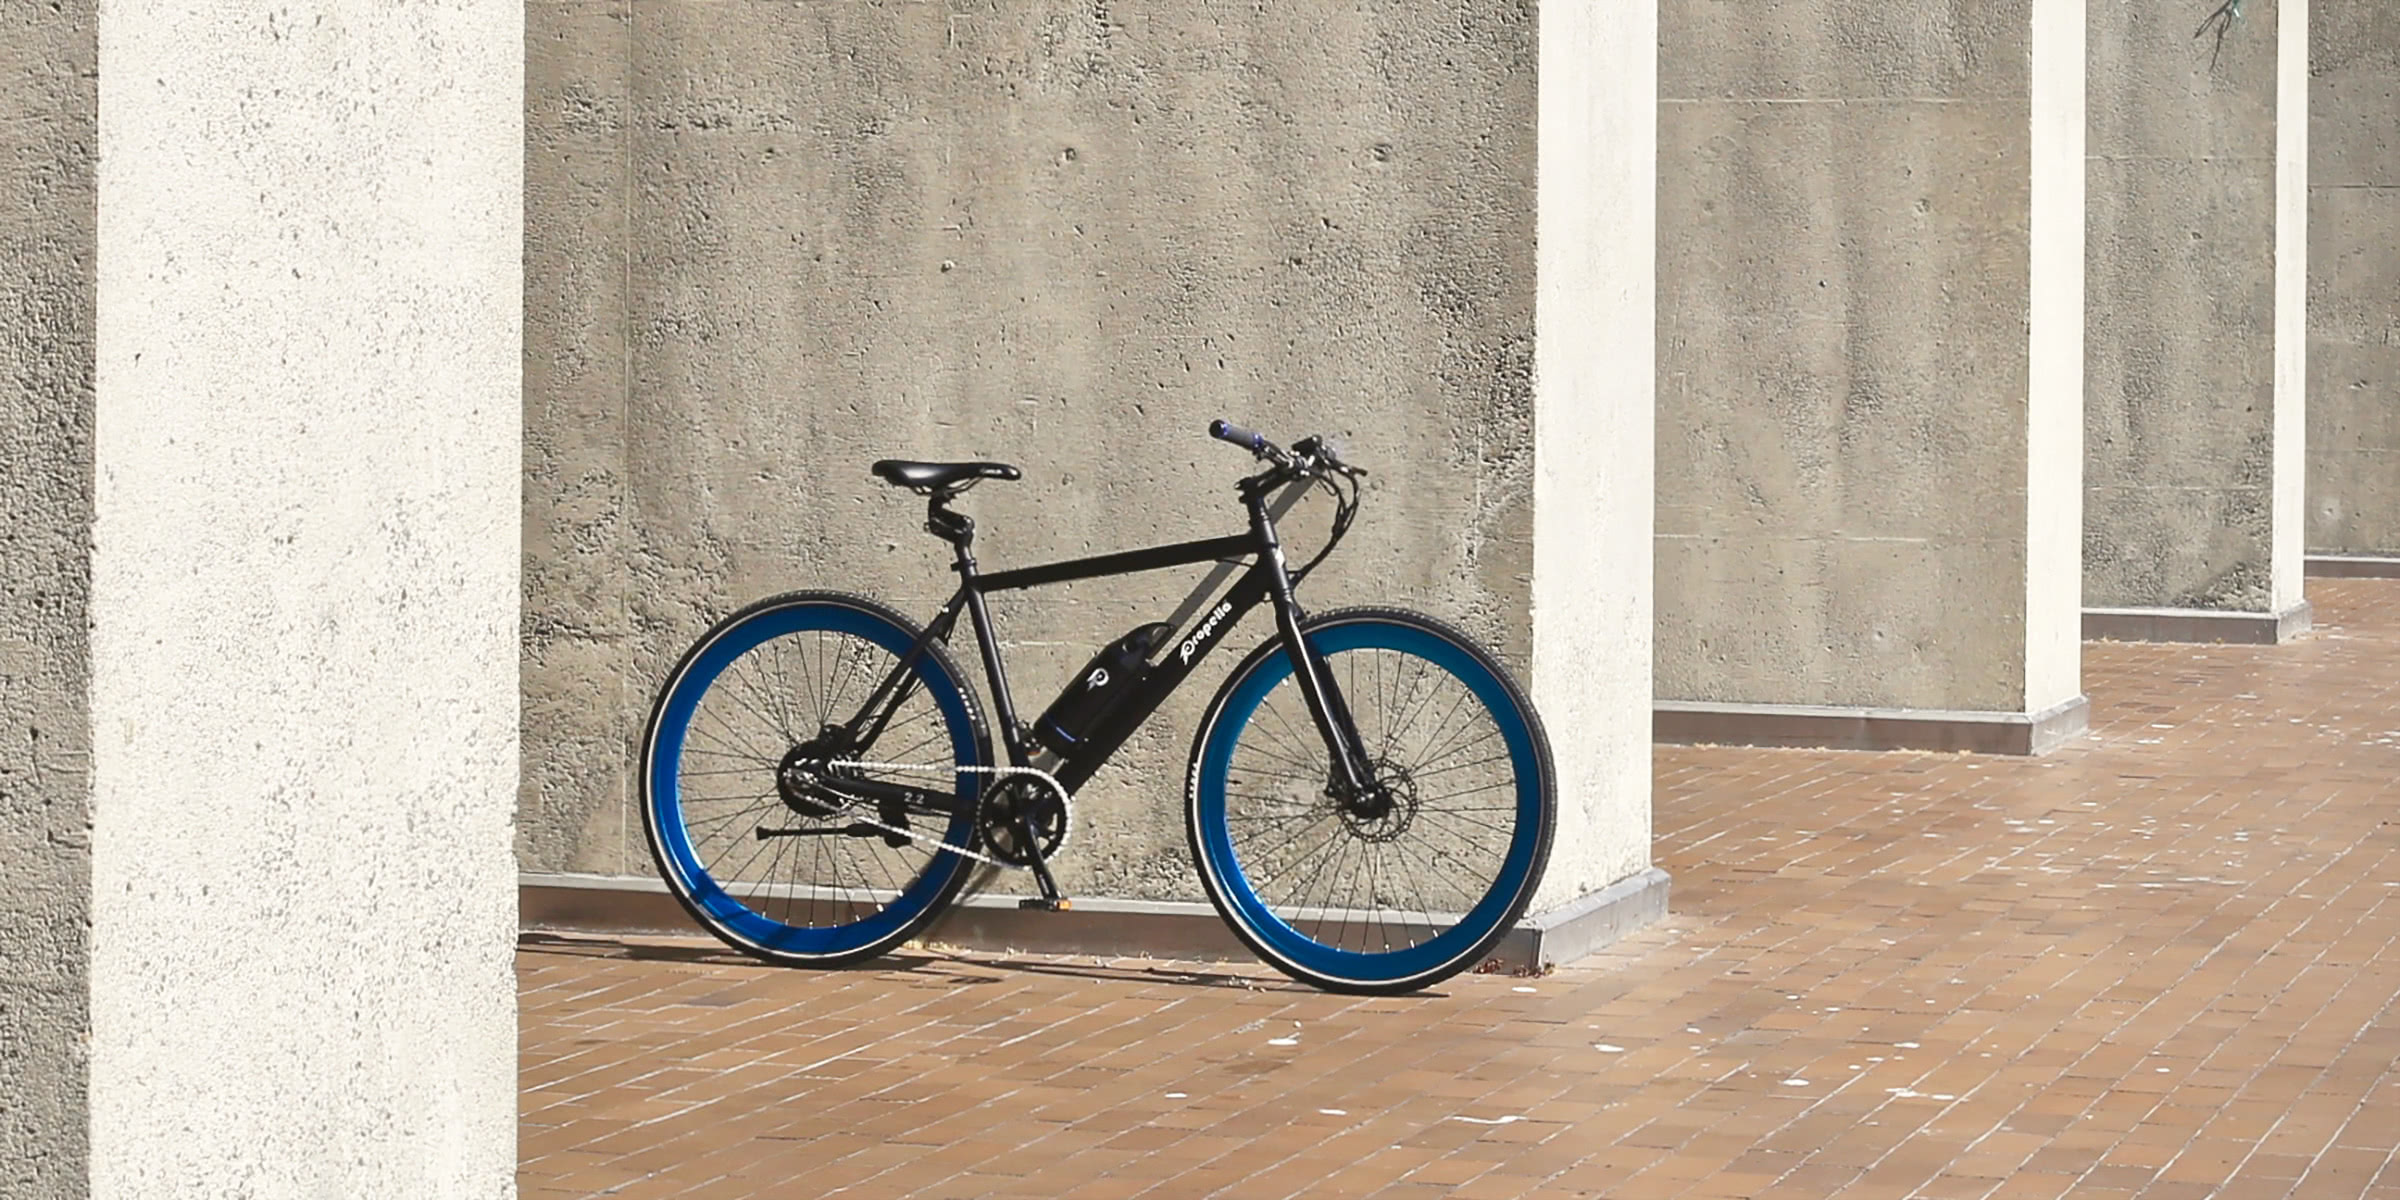 propella electric bike review - Luxe Digital